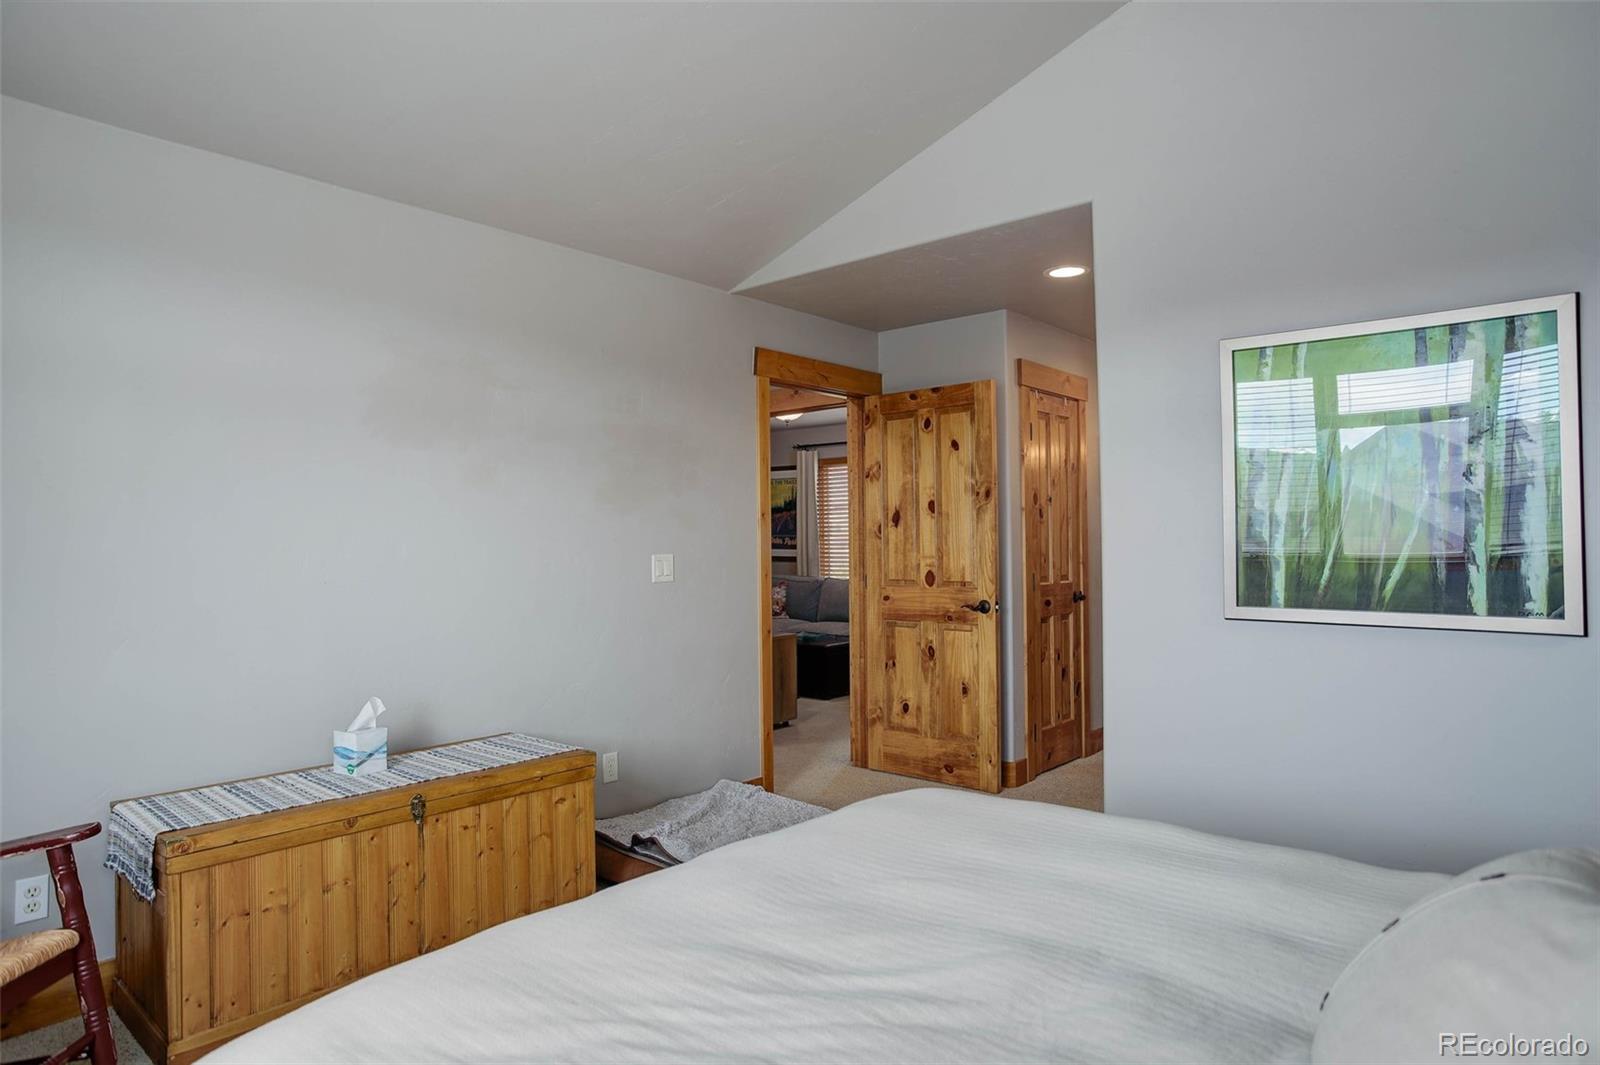 602 County Road 514, Tabernash, Colorado, 80478, United States, 3 Bedrooms Bedrooms, ,3 BathroomsBathrooms,Residential,For Sale,602 County Road 514,1505529